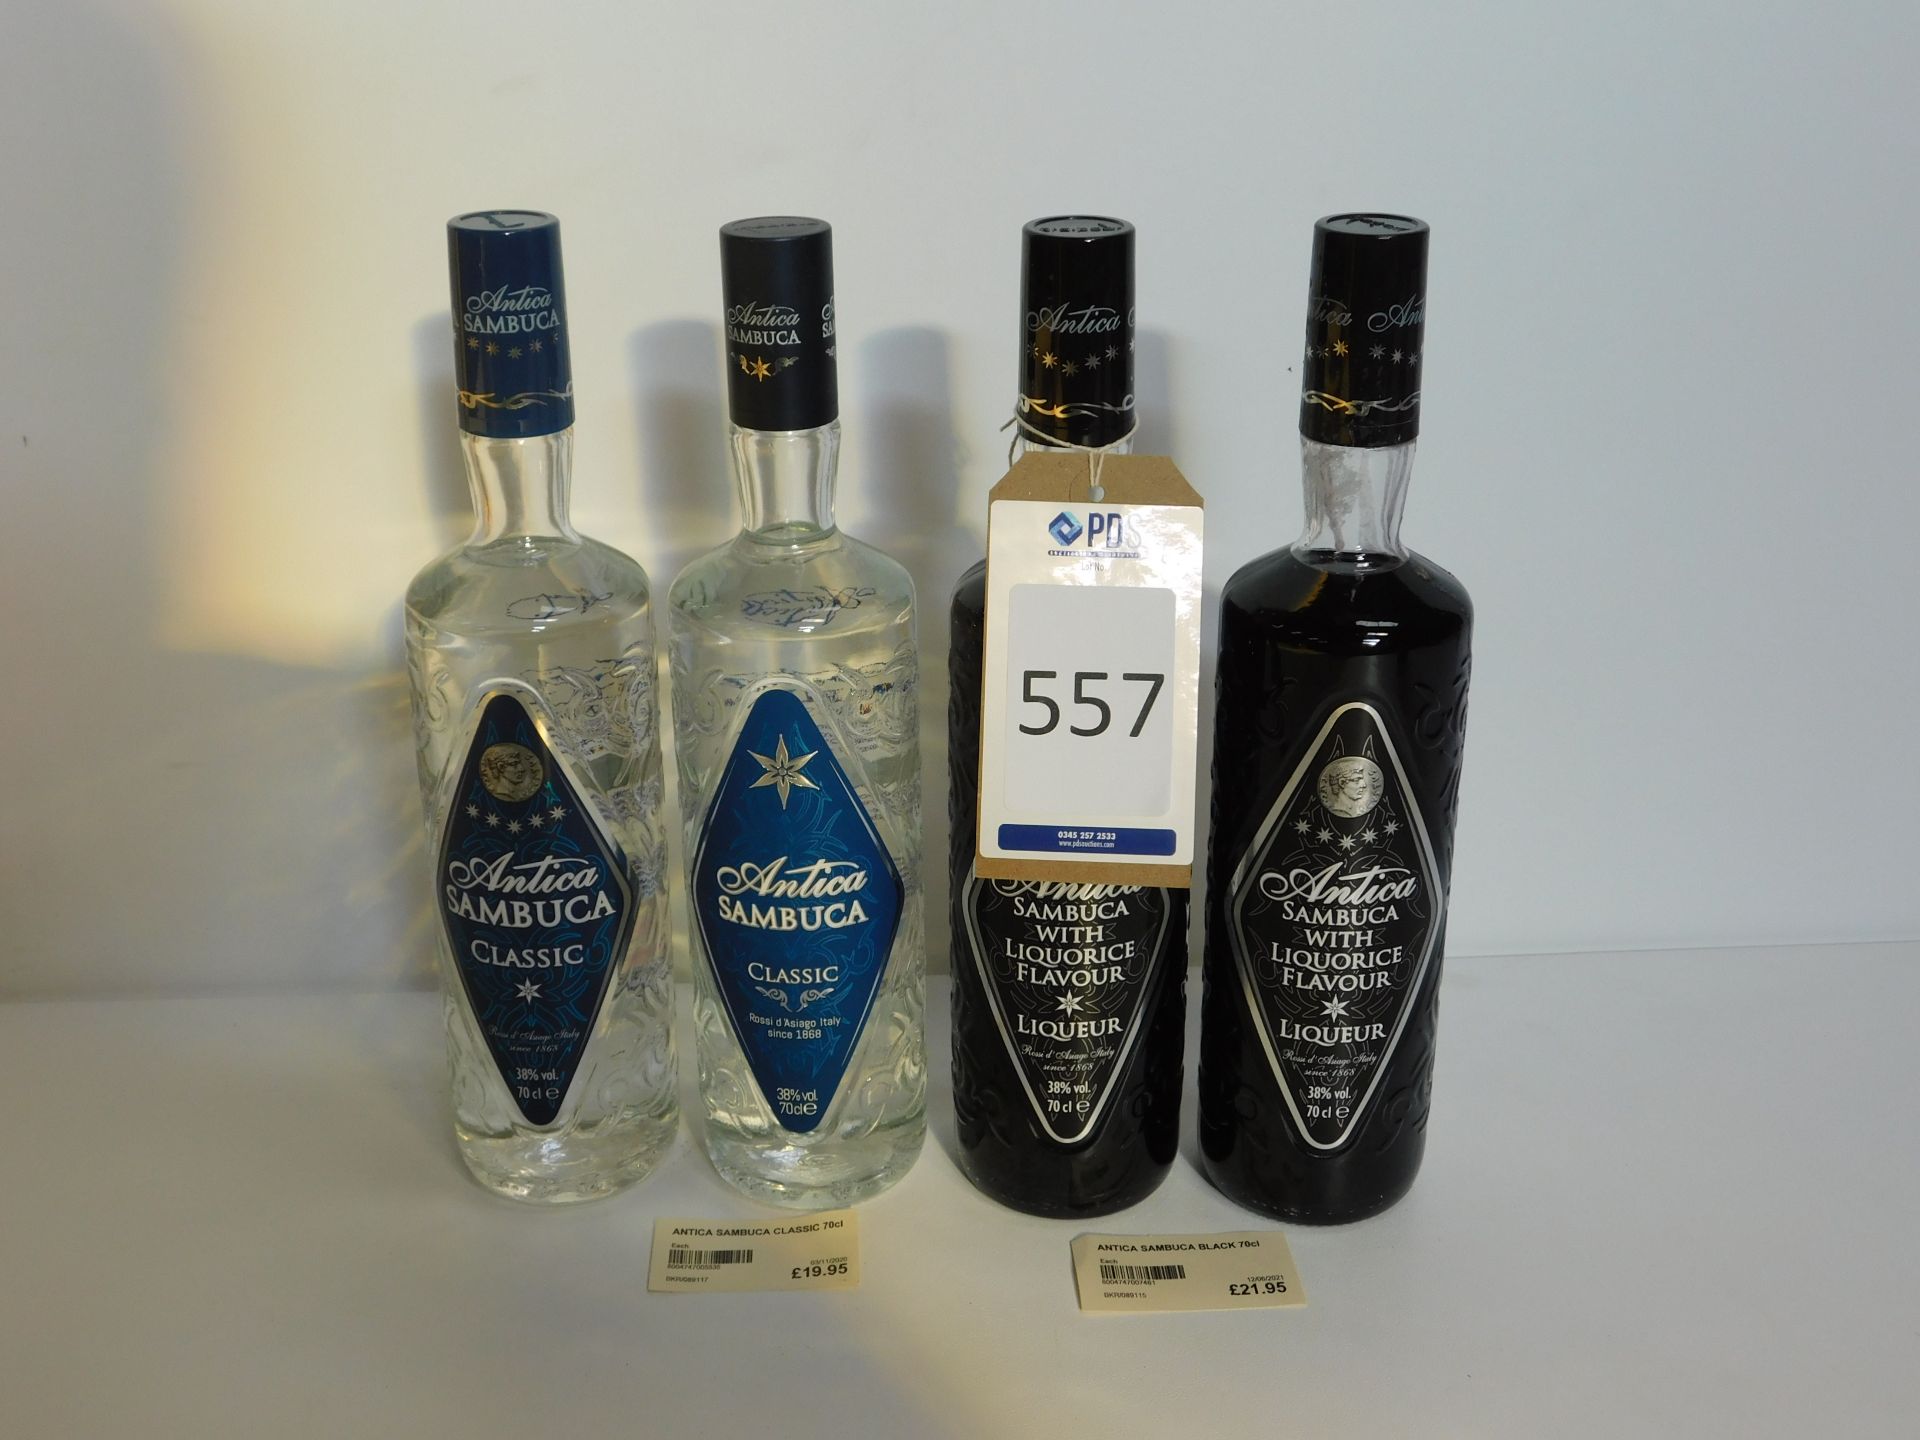 2 Bottles Antica Sambuca (Liquorice) & 2 Bottles of Antica Sambuca Classic, 70cl (Located: